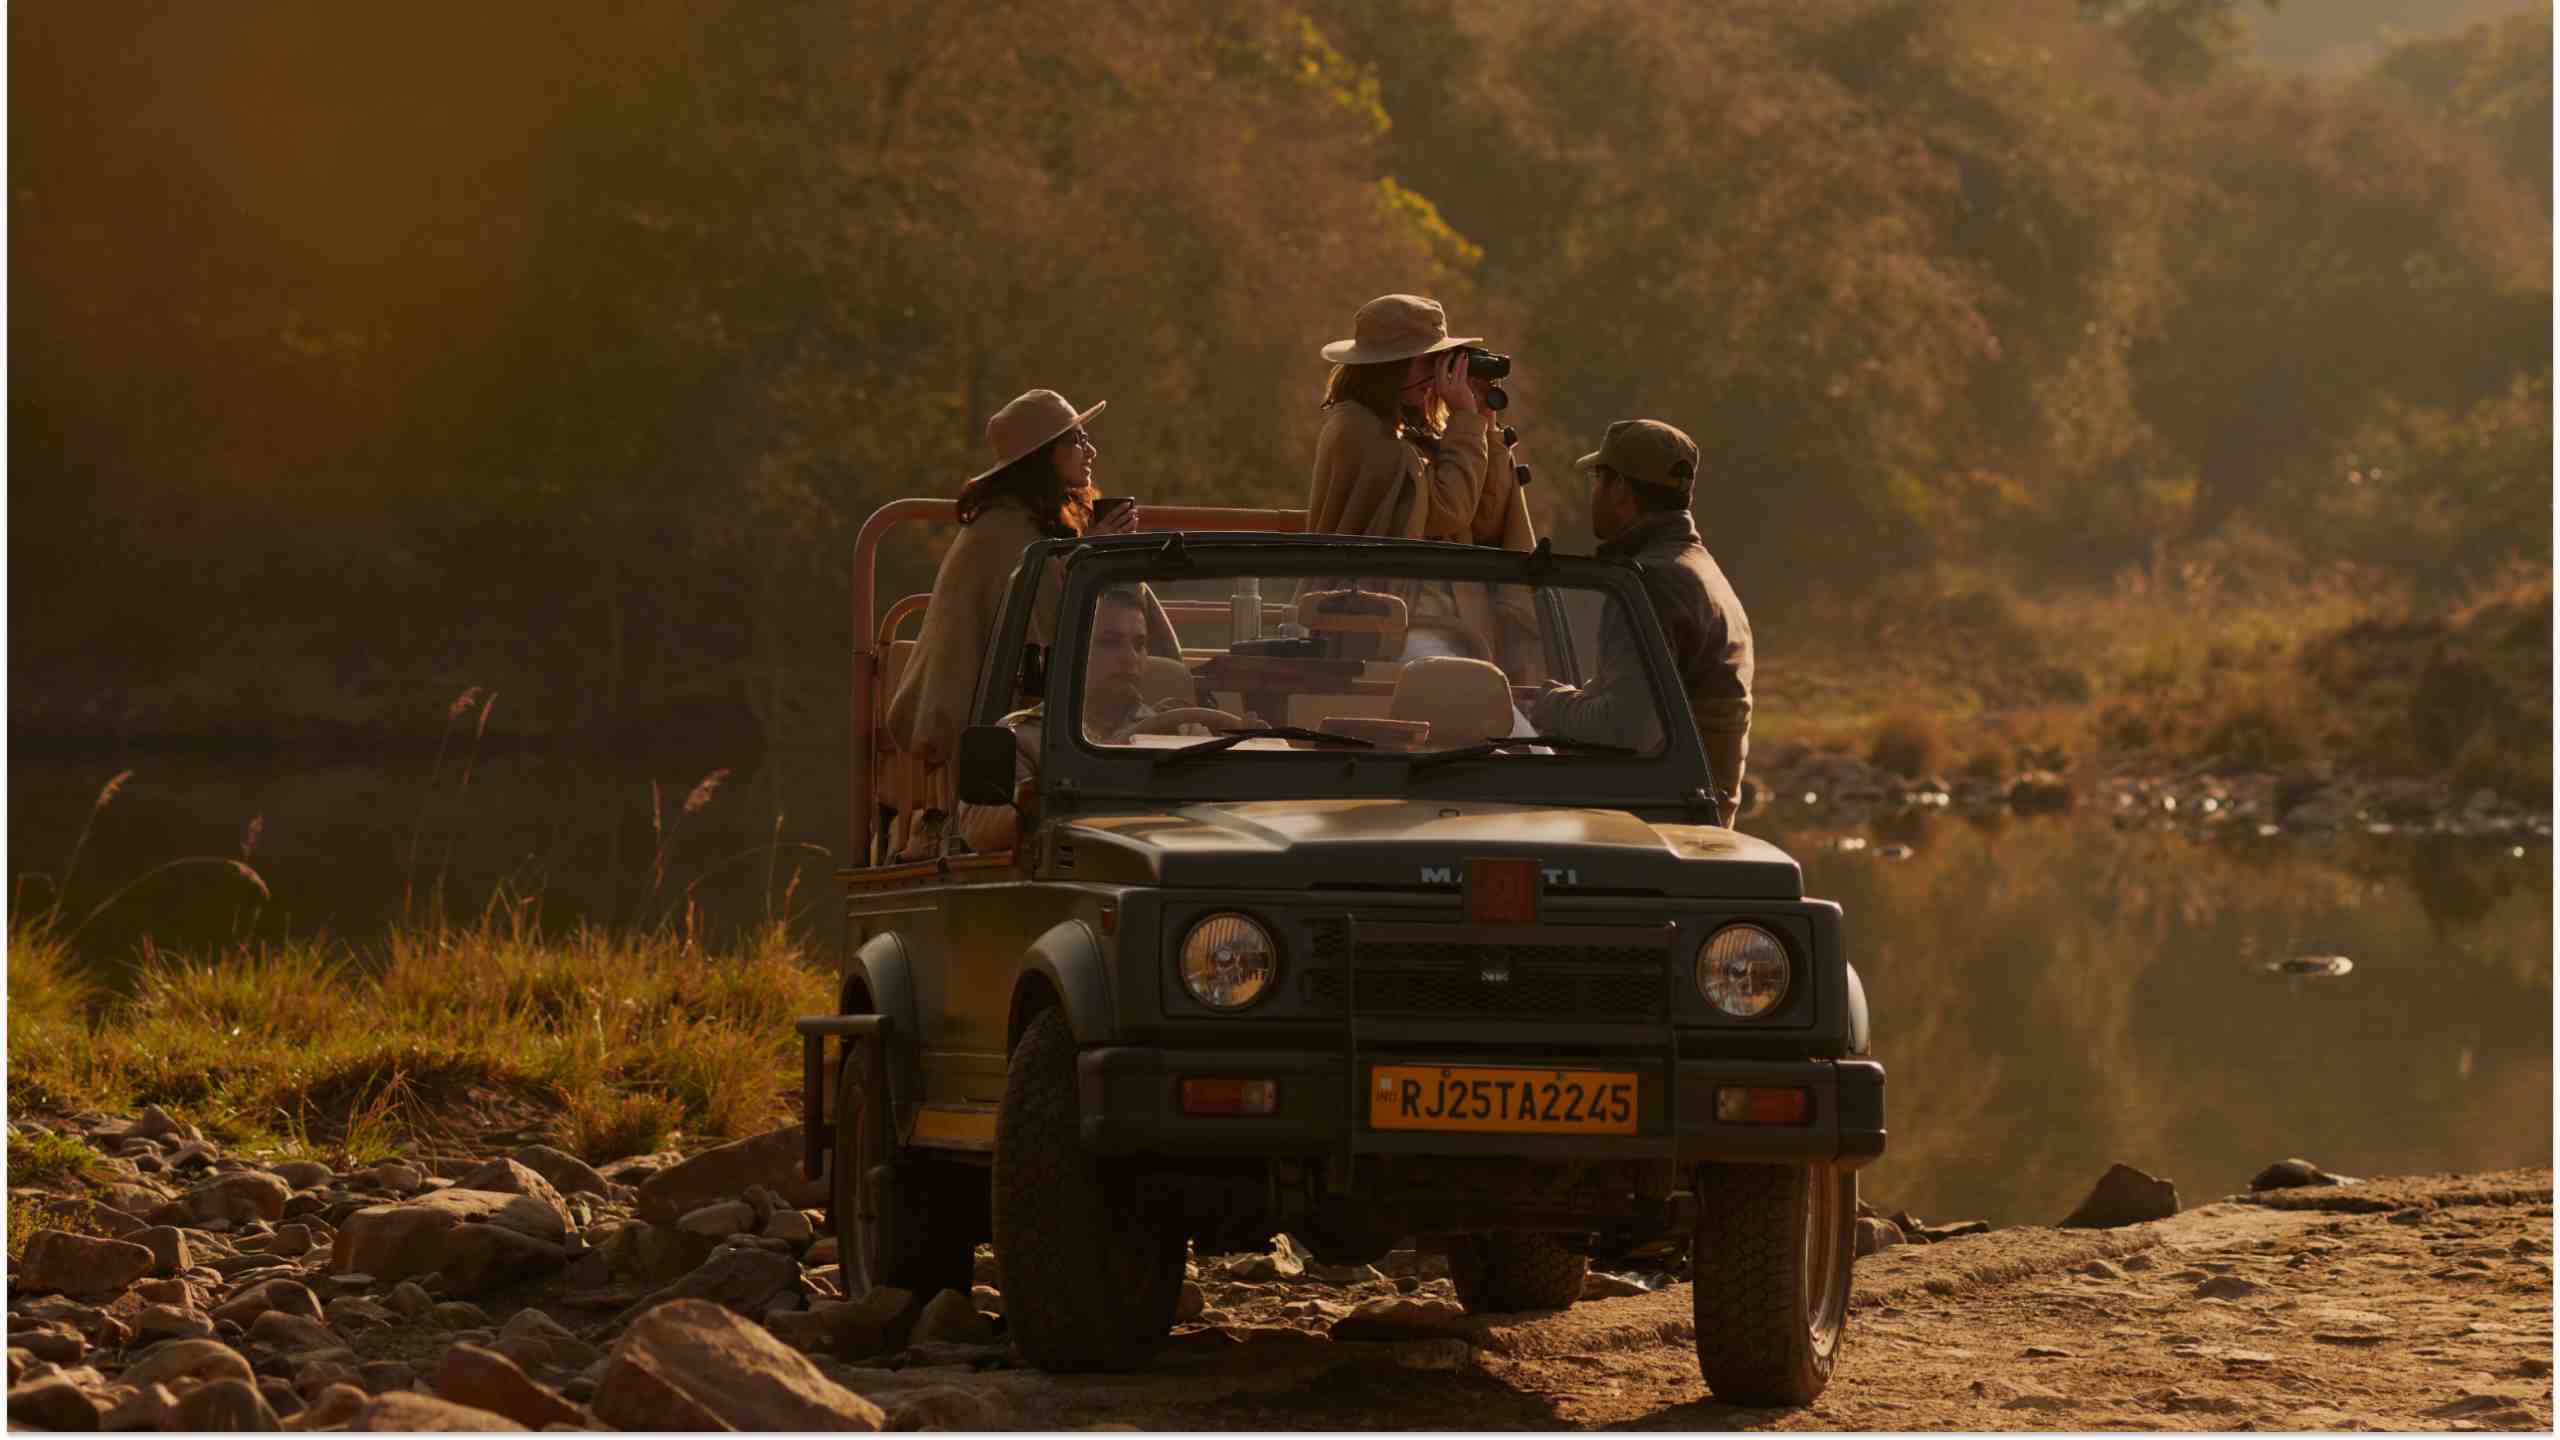 aaman-i-khas-safari-outdoor-jeep-with-people